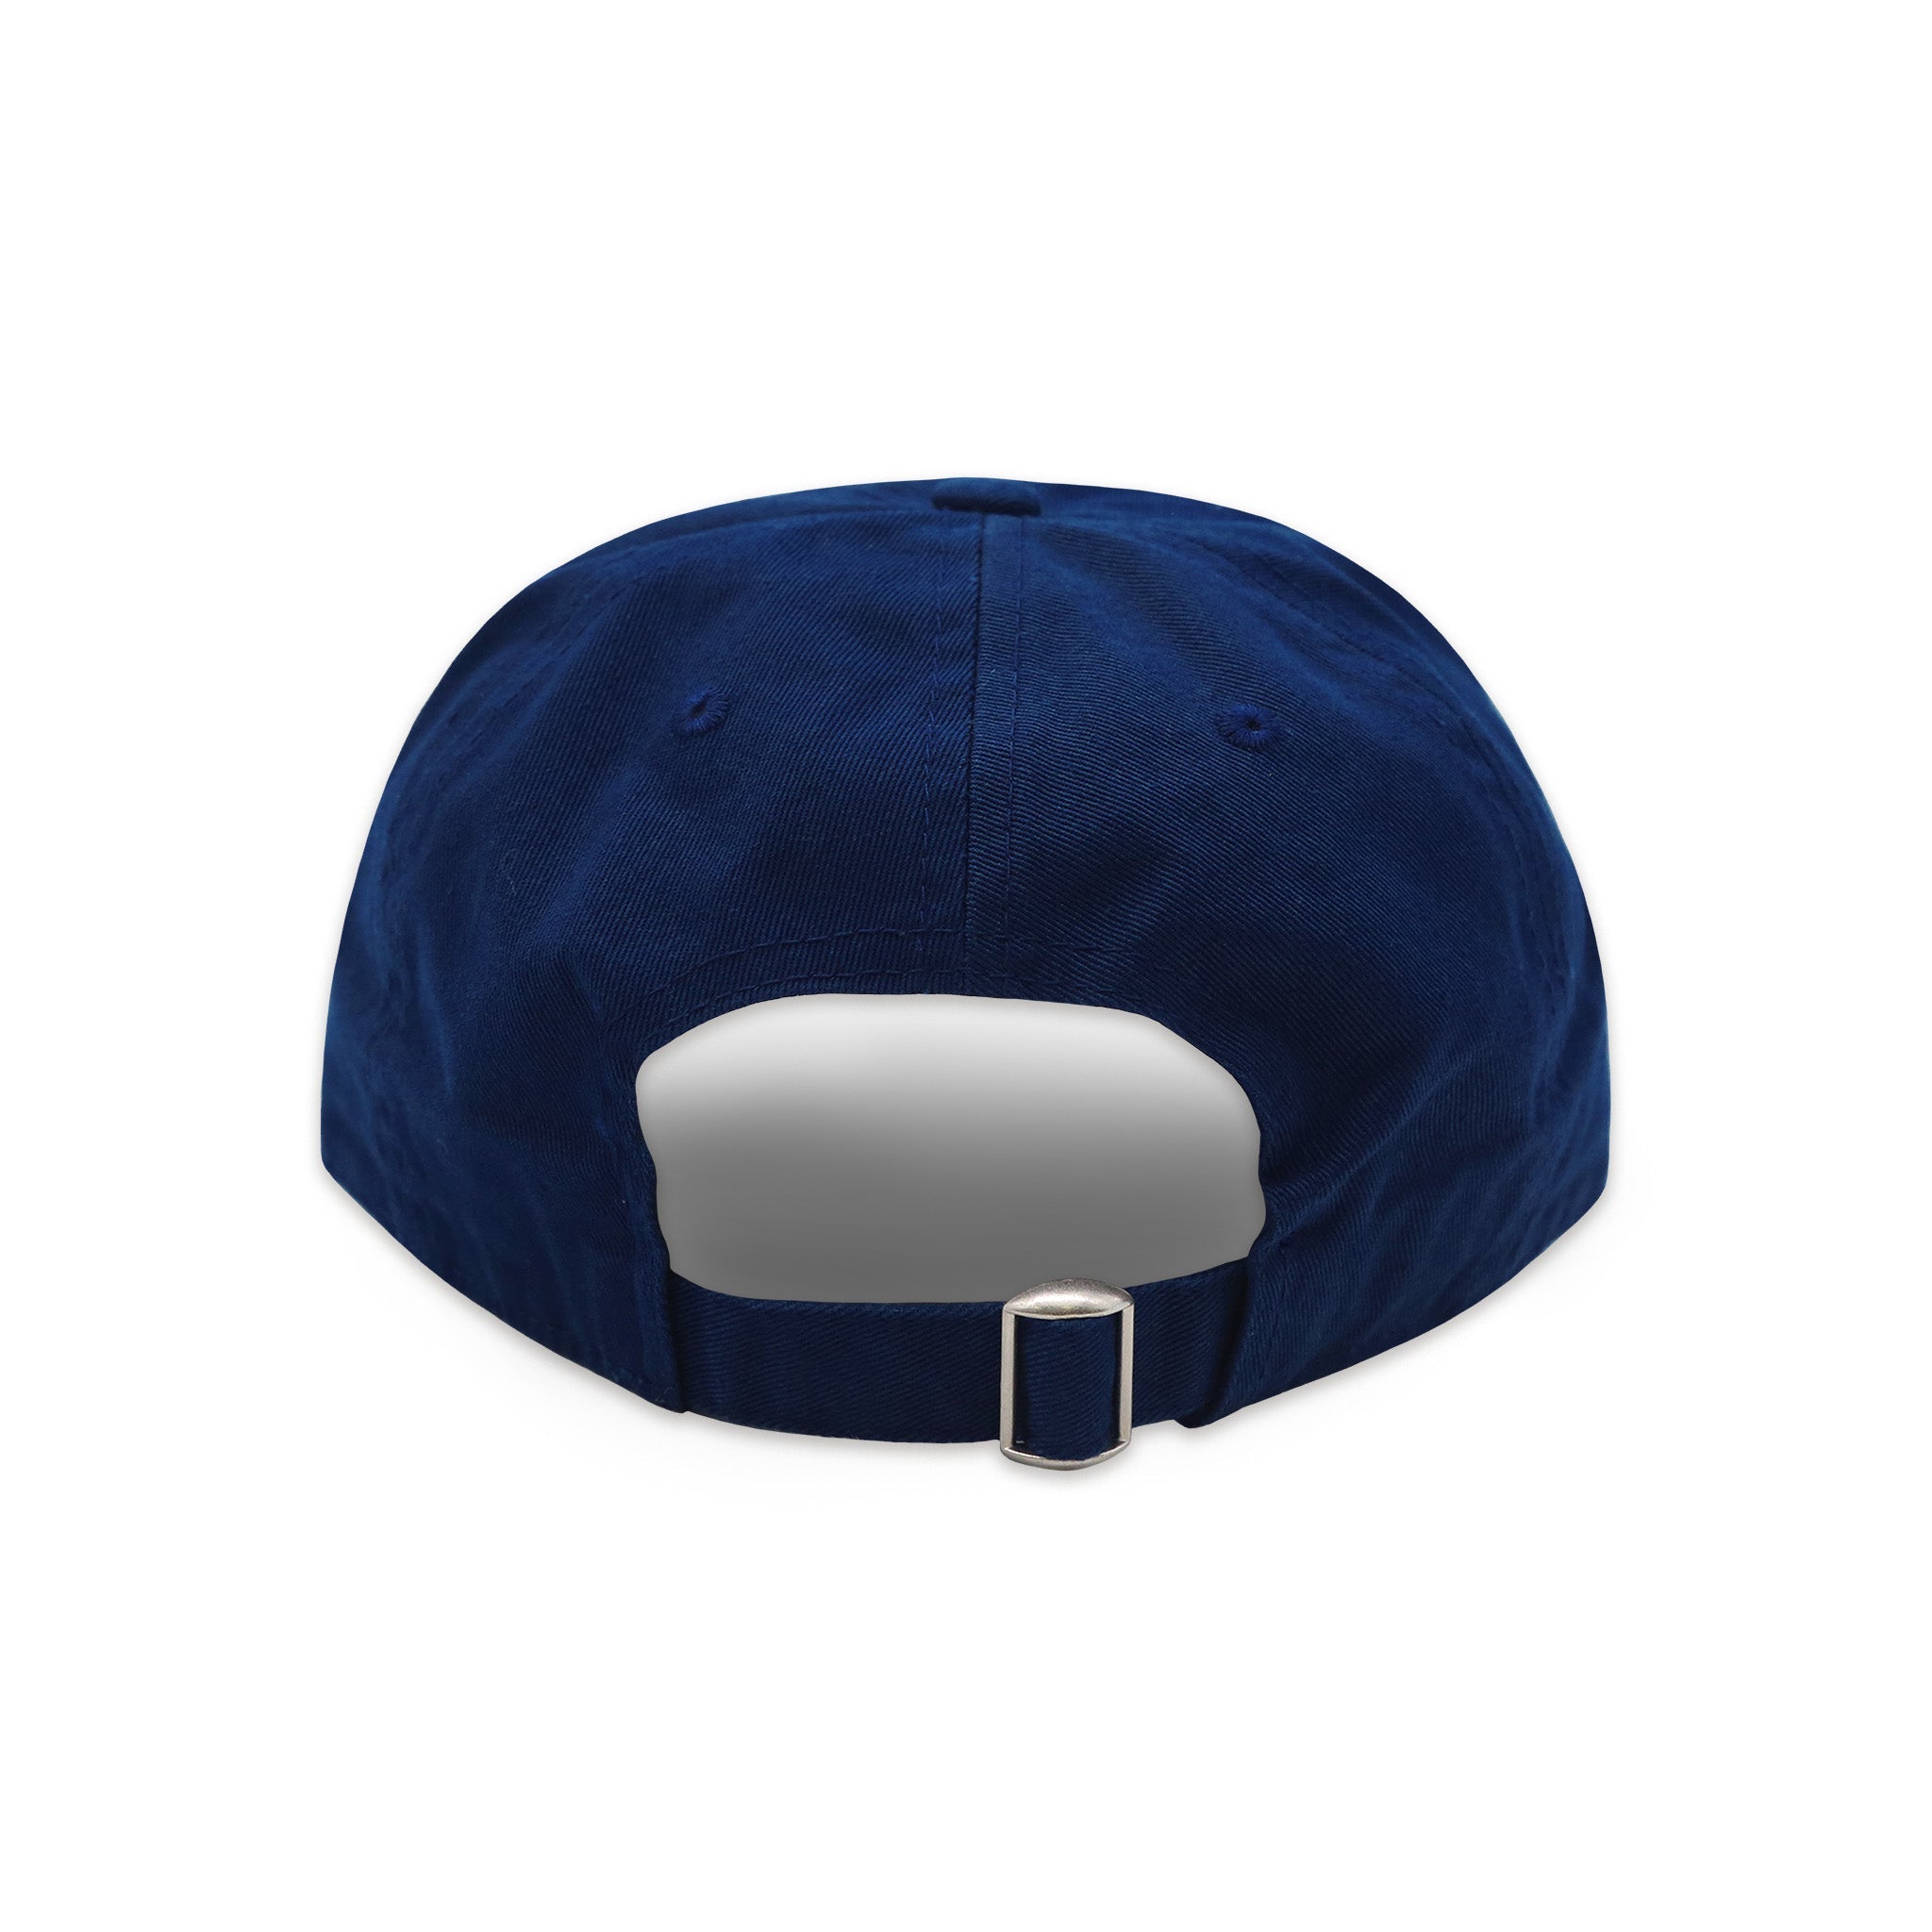 Golden Retriever Small Fit Hat (Navy)